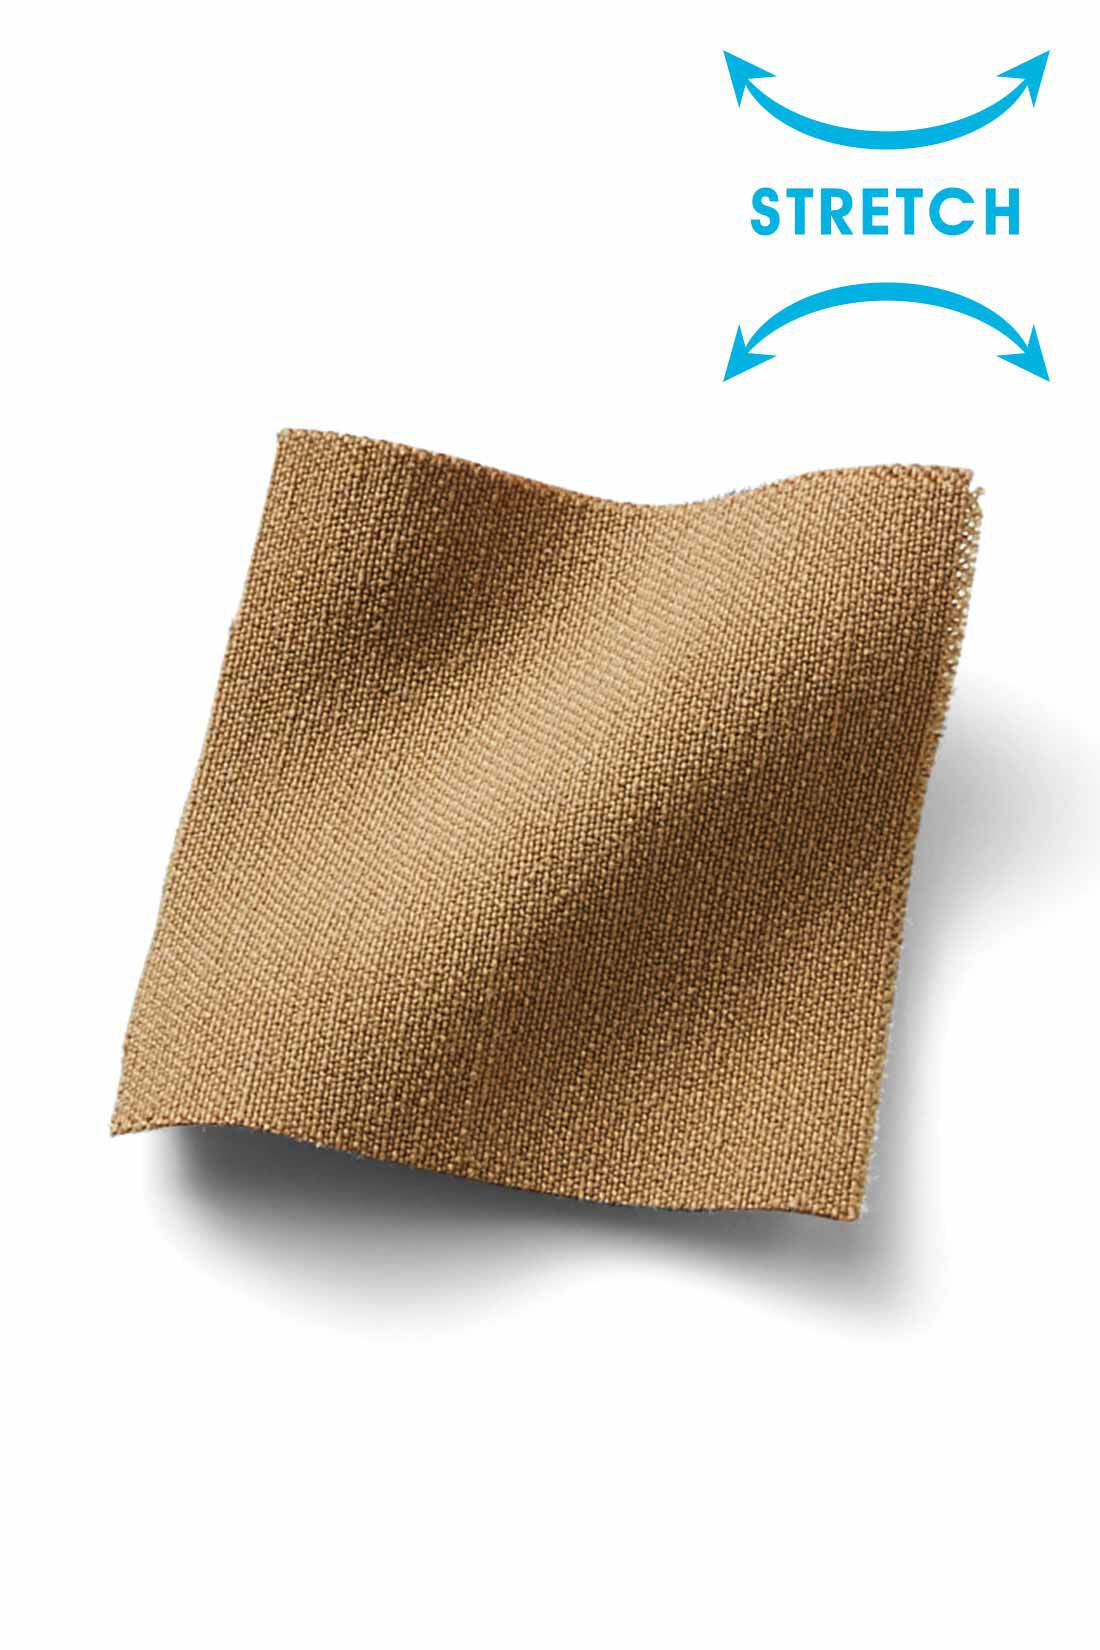 IEDIT|IEDIT[イディット]　ウエストメッシュで快適 ストレッチ布はく素材の美脚レギンスパンツ〈ベージュ〉|カットソーみたいなはき心地ながら、きちんと見えもかなう布はく素材。